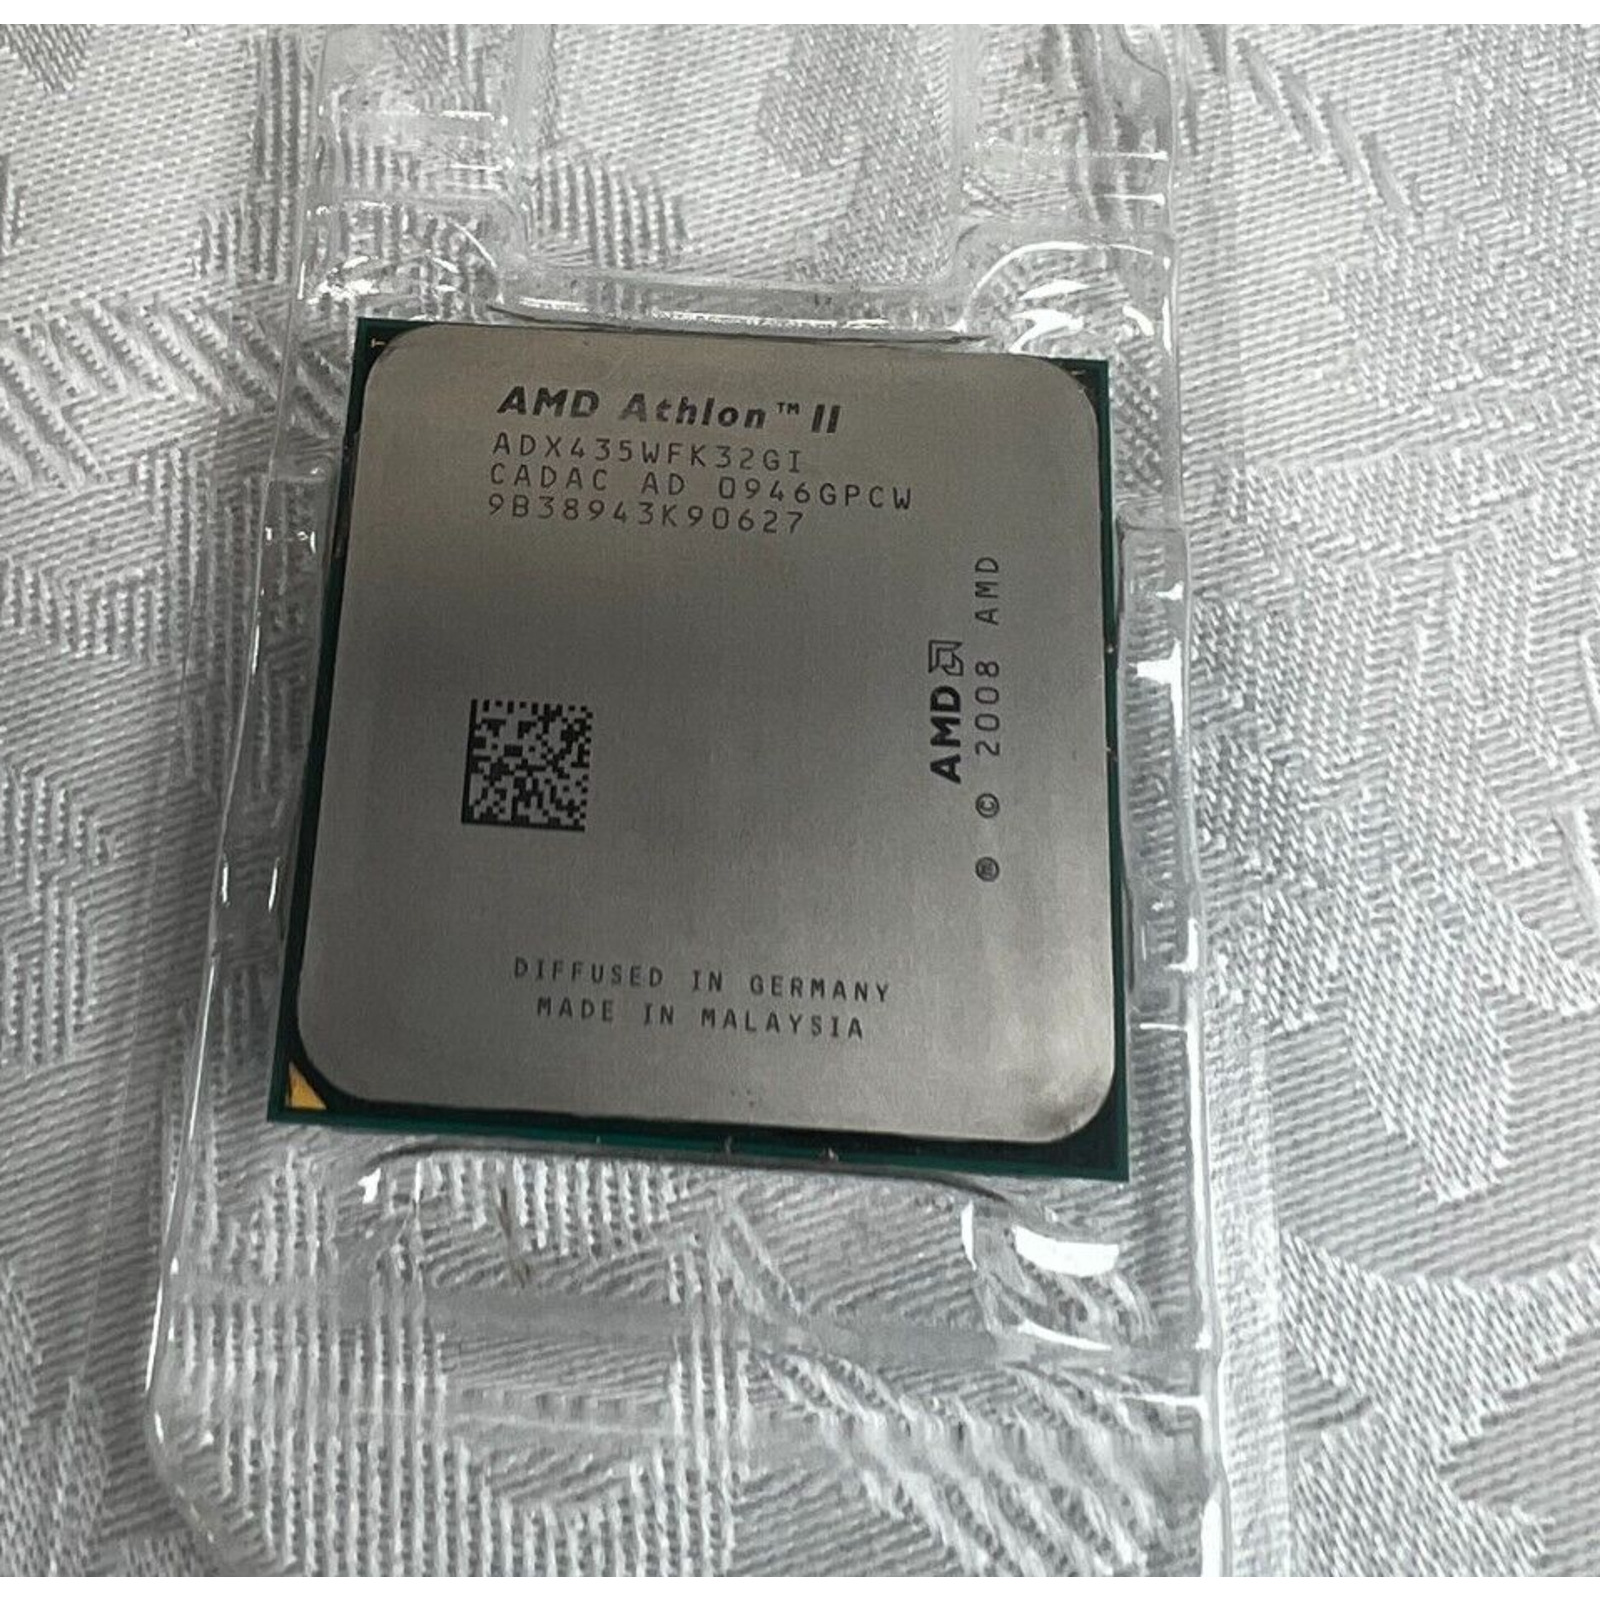 AMD Athlon II X3 2.9GHz 3-Cores AM2+/AM3 CPU | ADX435WFK32GI